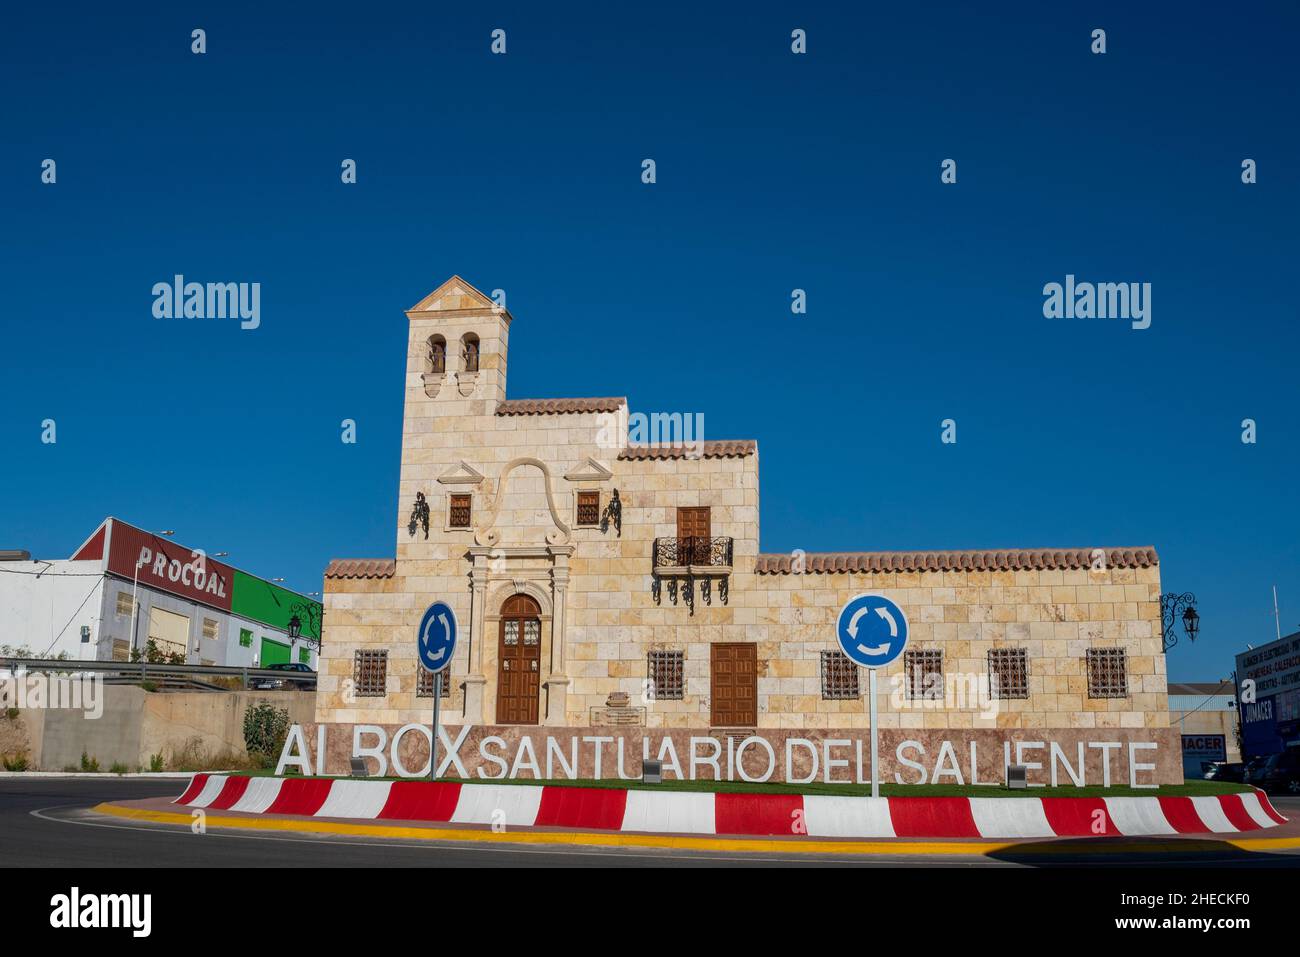 Albox, Almeria, Andalusia, Spain. Entrance road roundabout with reproduction of the Santuario del Saliente, Monastery of the Virgin of the Saliente Stock Photo